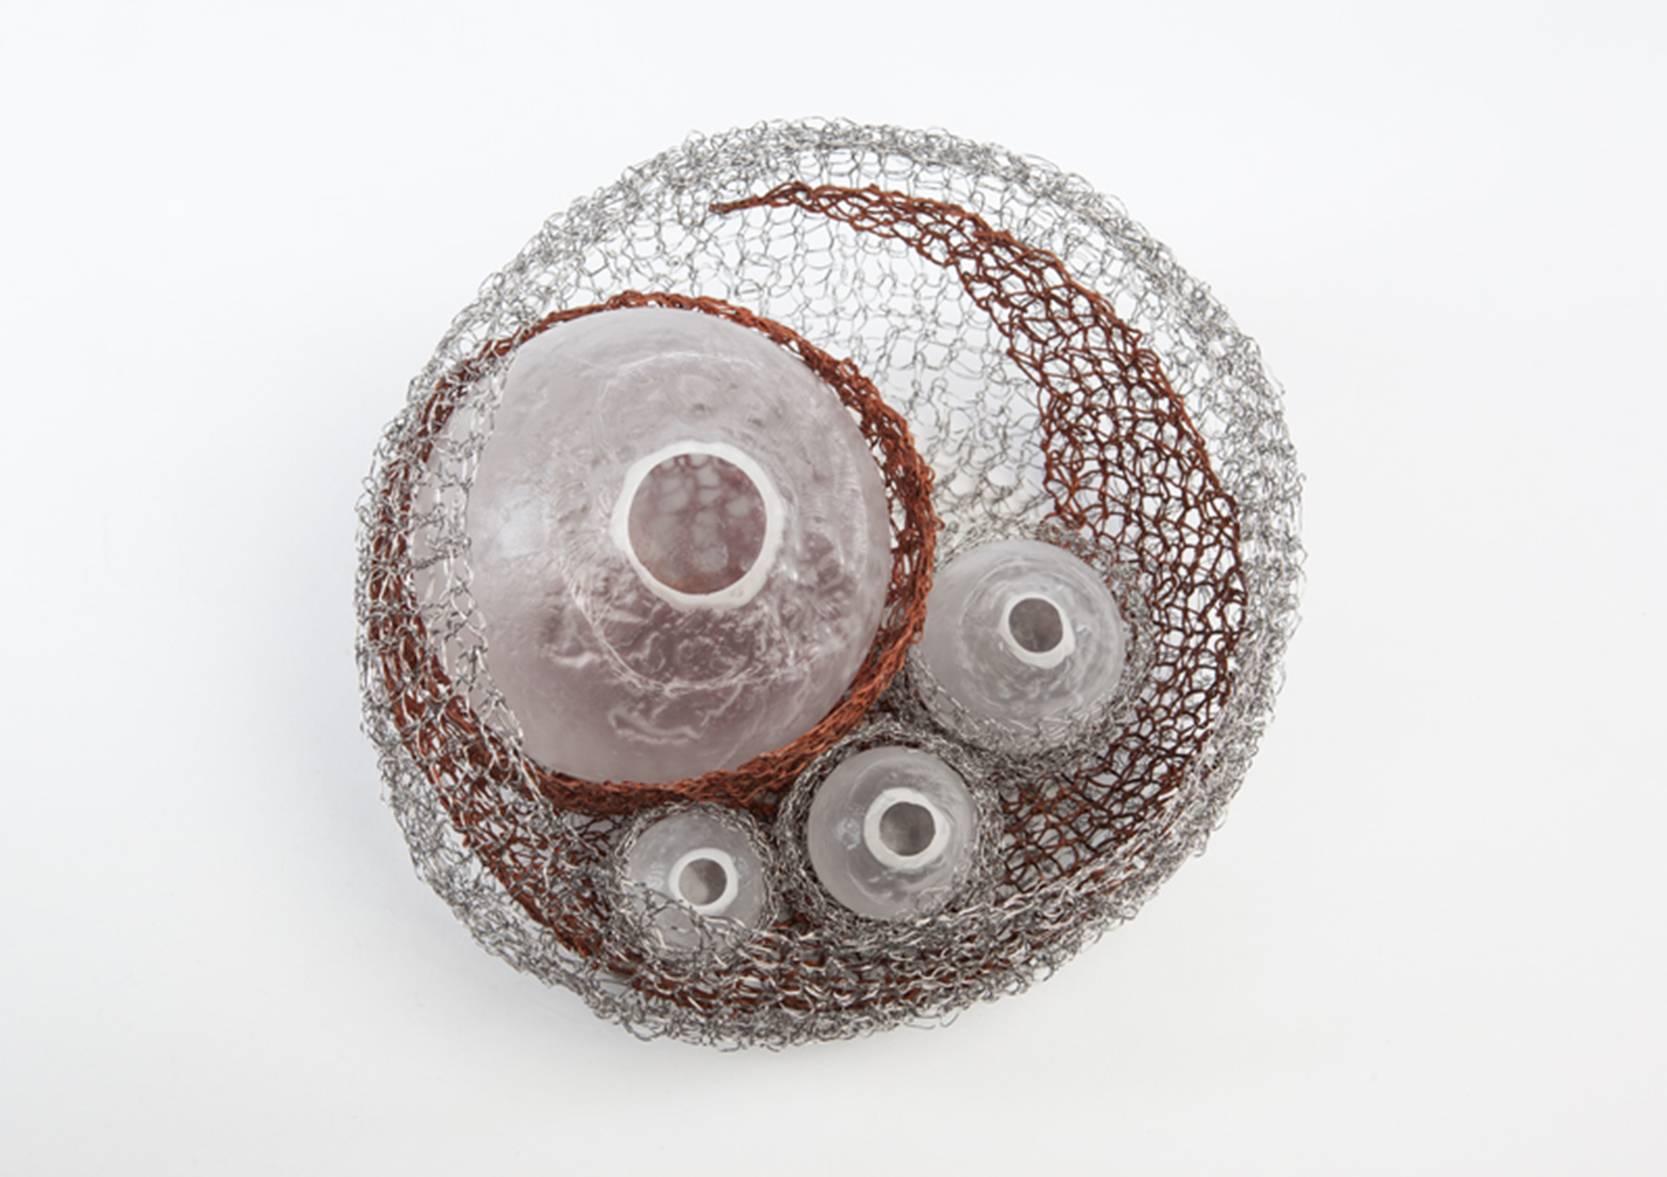 Carole Frève Still-Life Sculpture - Fragile Nest of Life